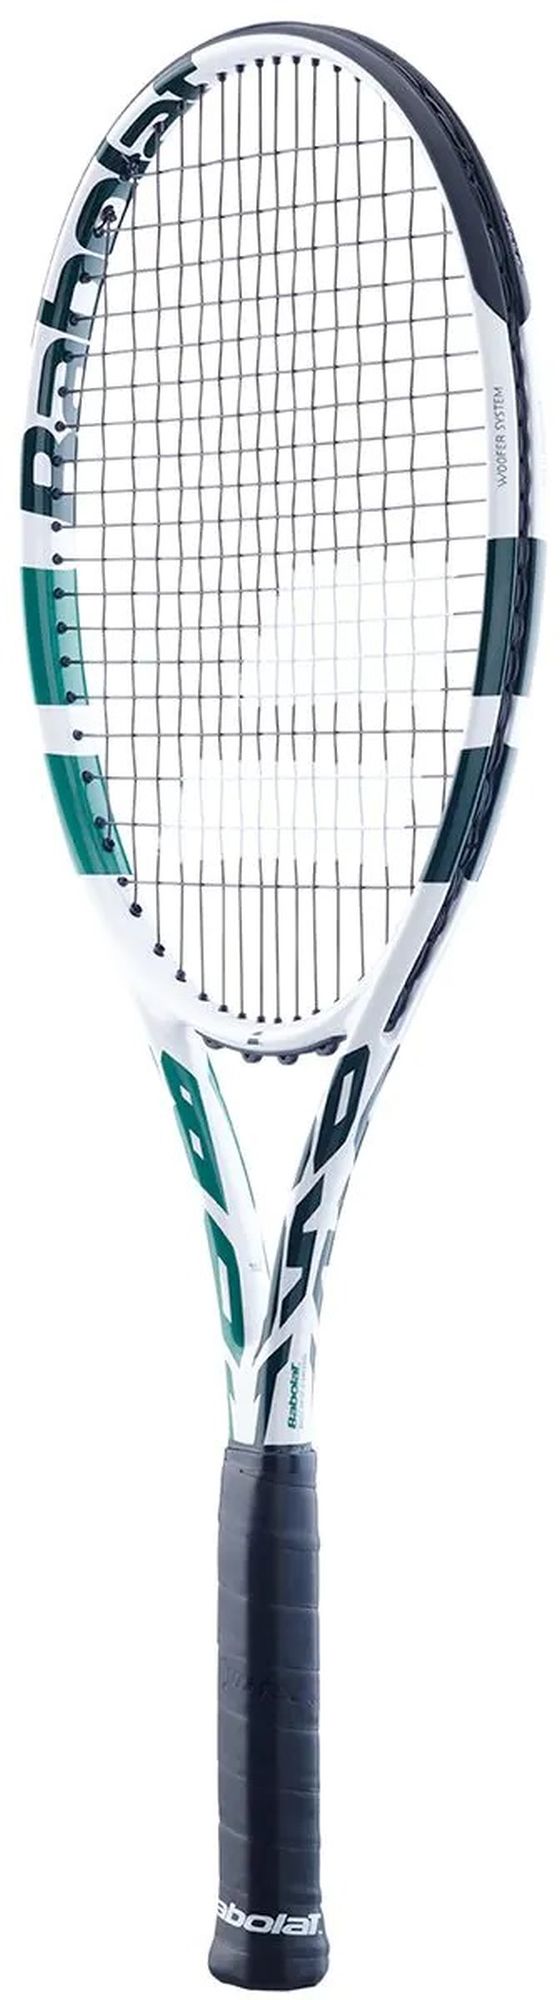 Raqueta Tenis Babolat Boost Wimbledon Adulto